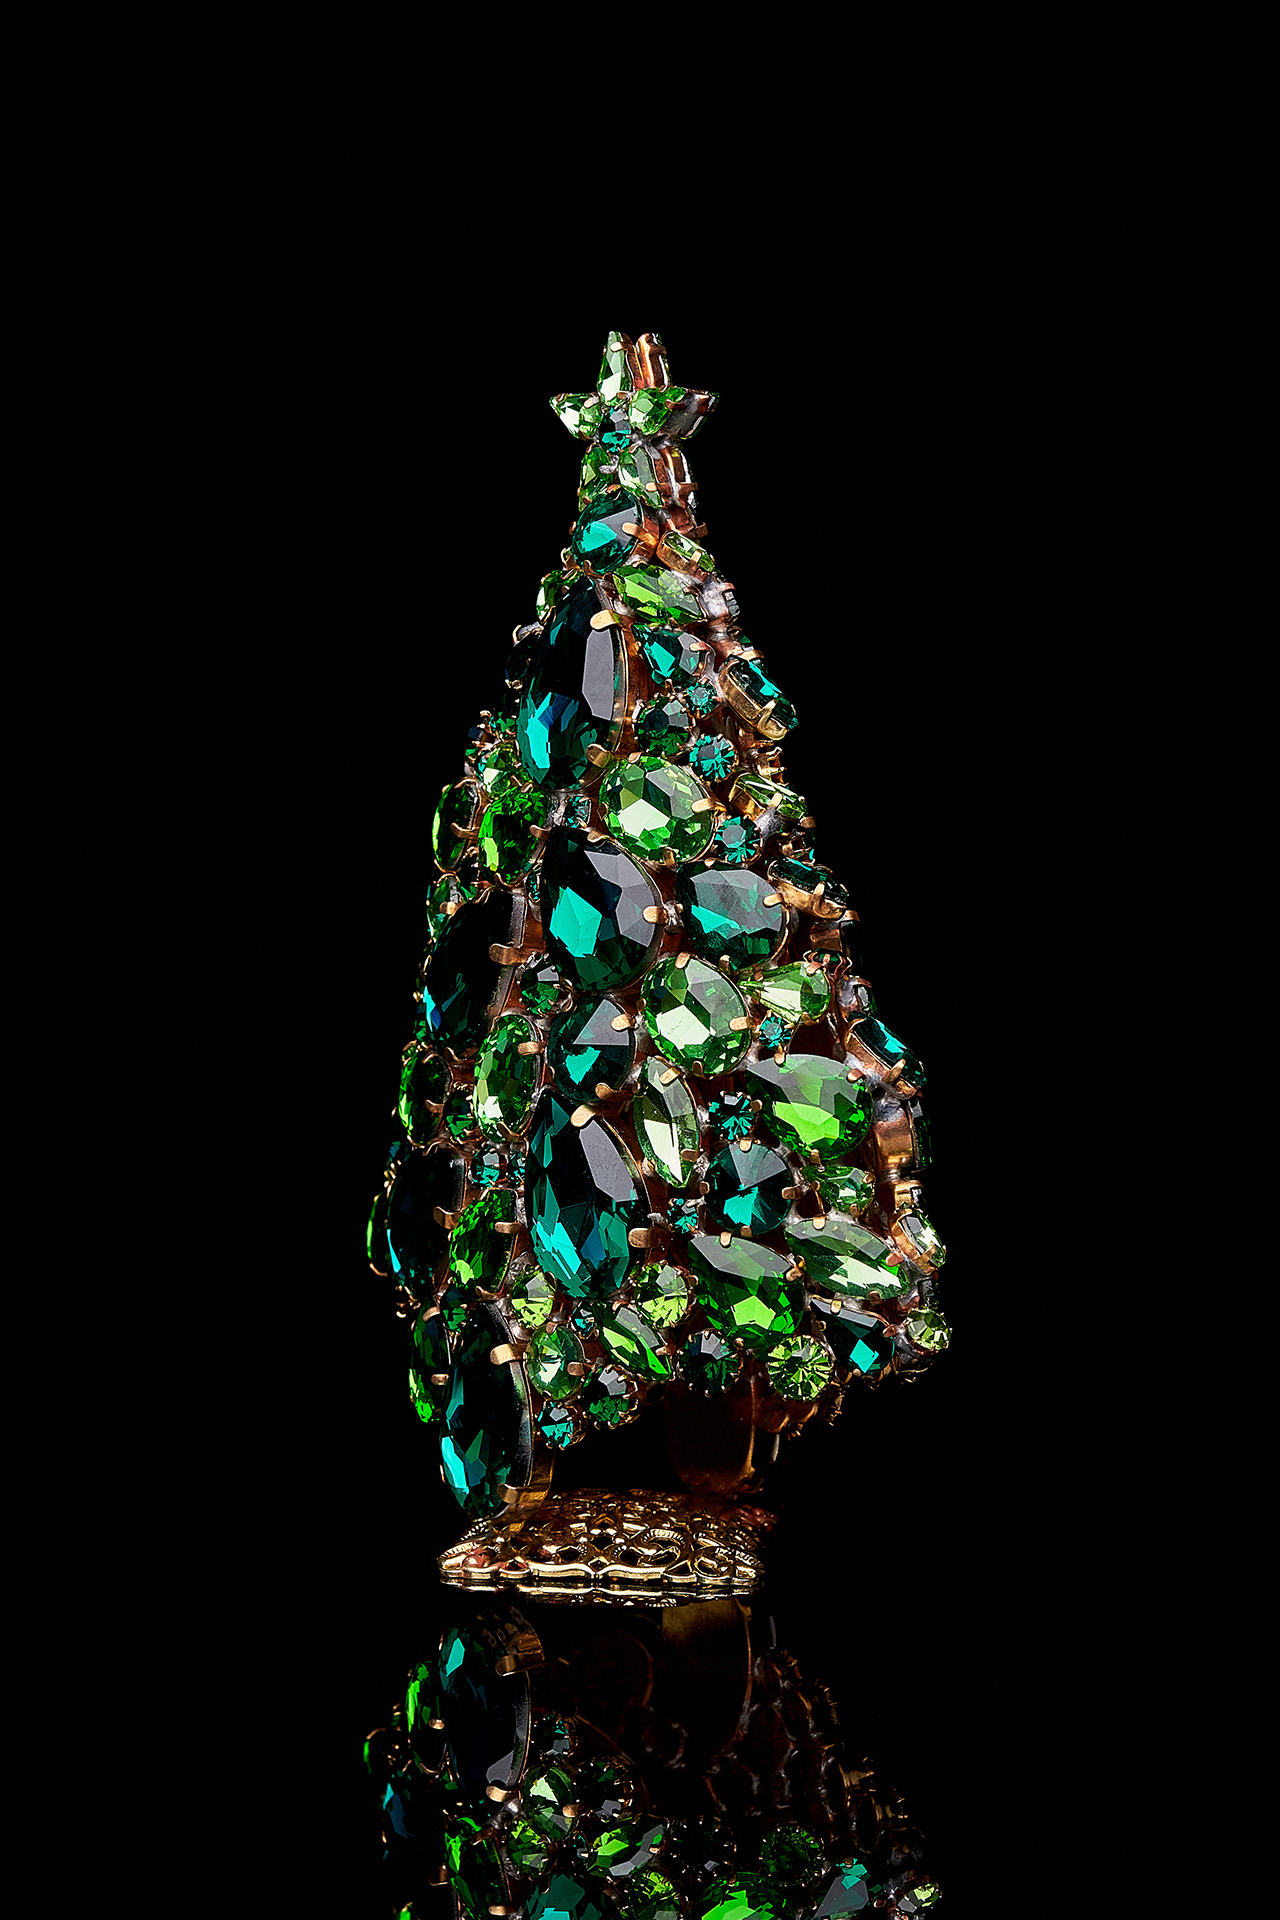 Czech handmade magical 3D Christmas tree in green rhinestones